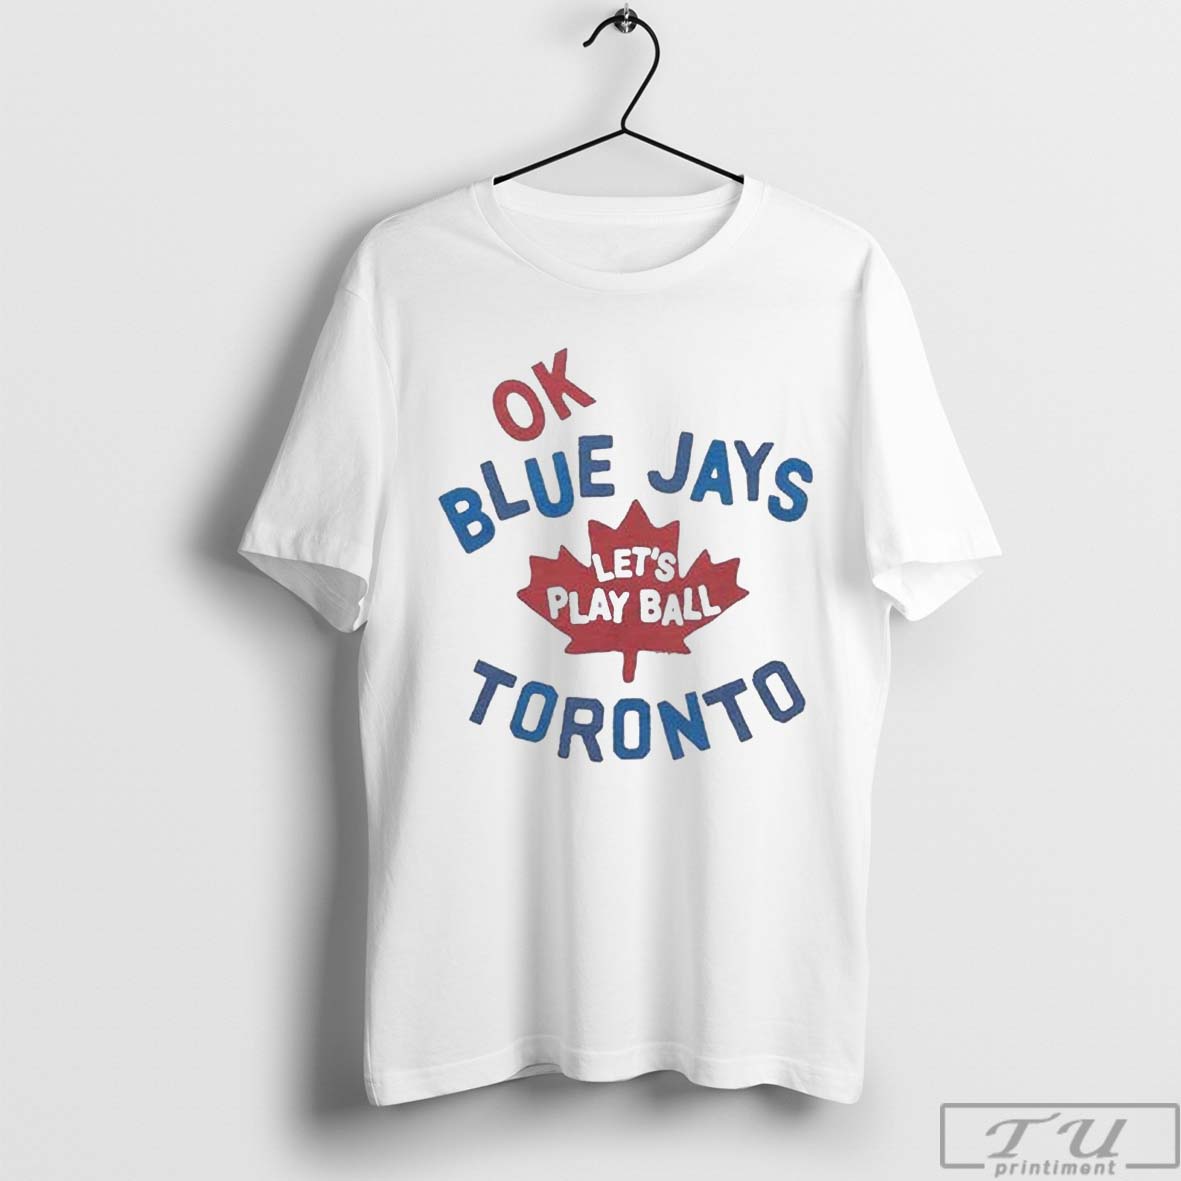 Toronto Blue Jays Let's Play Ball Shirt, Toronto Baseball Tee, Baseball  Team Shirt, MLB Toronto - Printiment